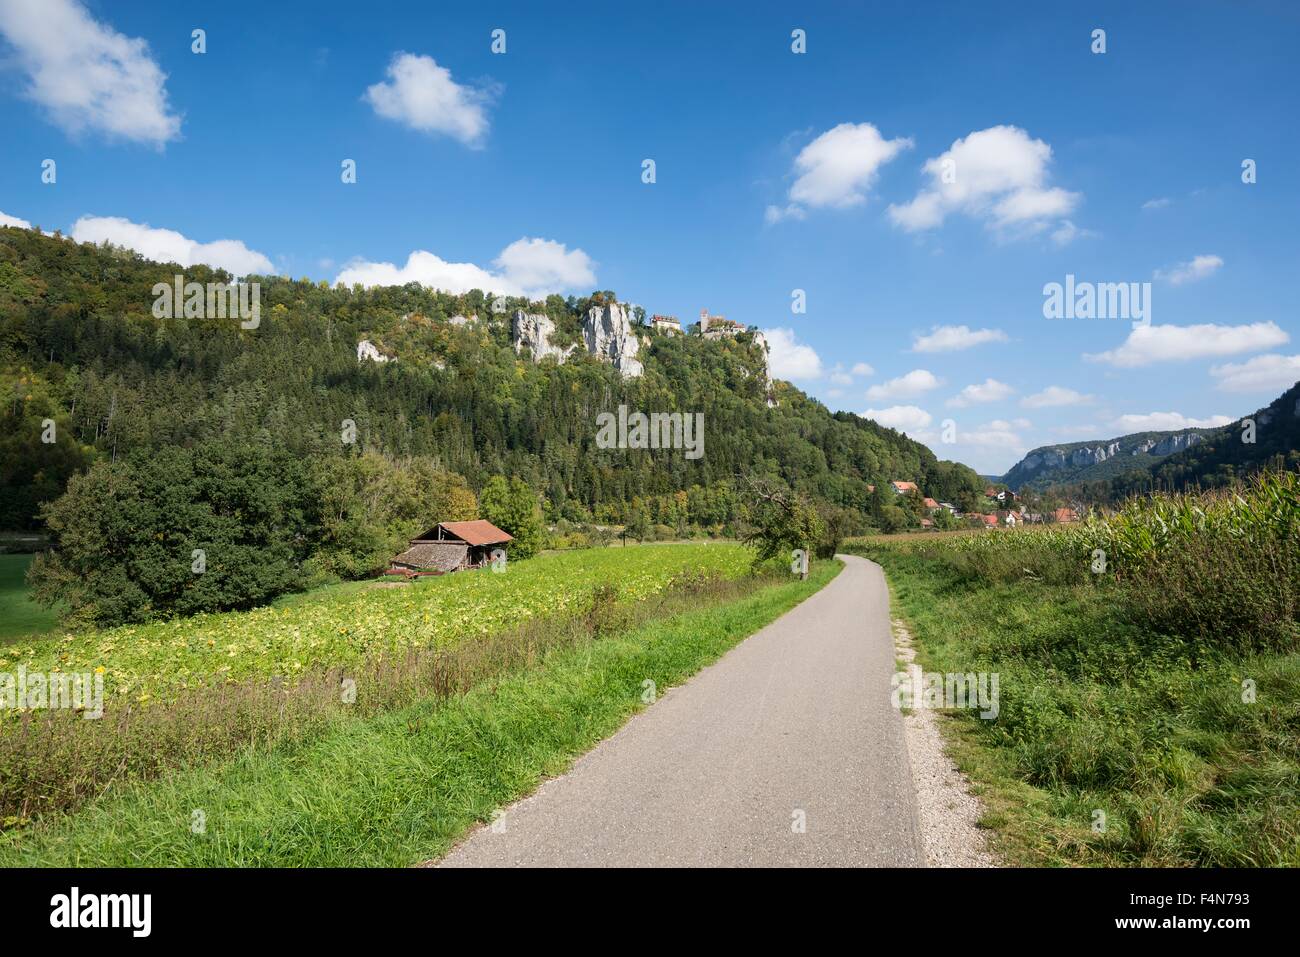 Germania Baden-Wuerttemberg, Sigmaringen district, Danubio pista ciclabile in alto a valle del Danubio Foto Stock